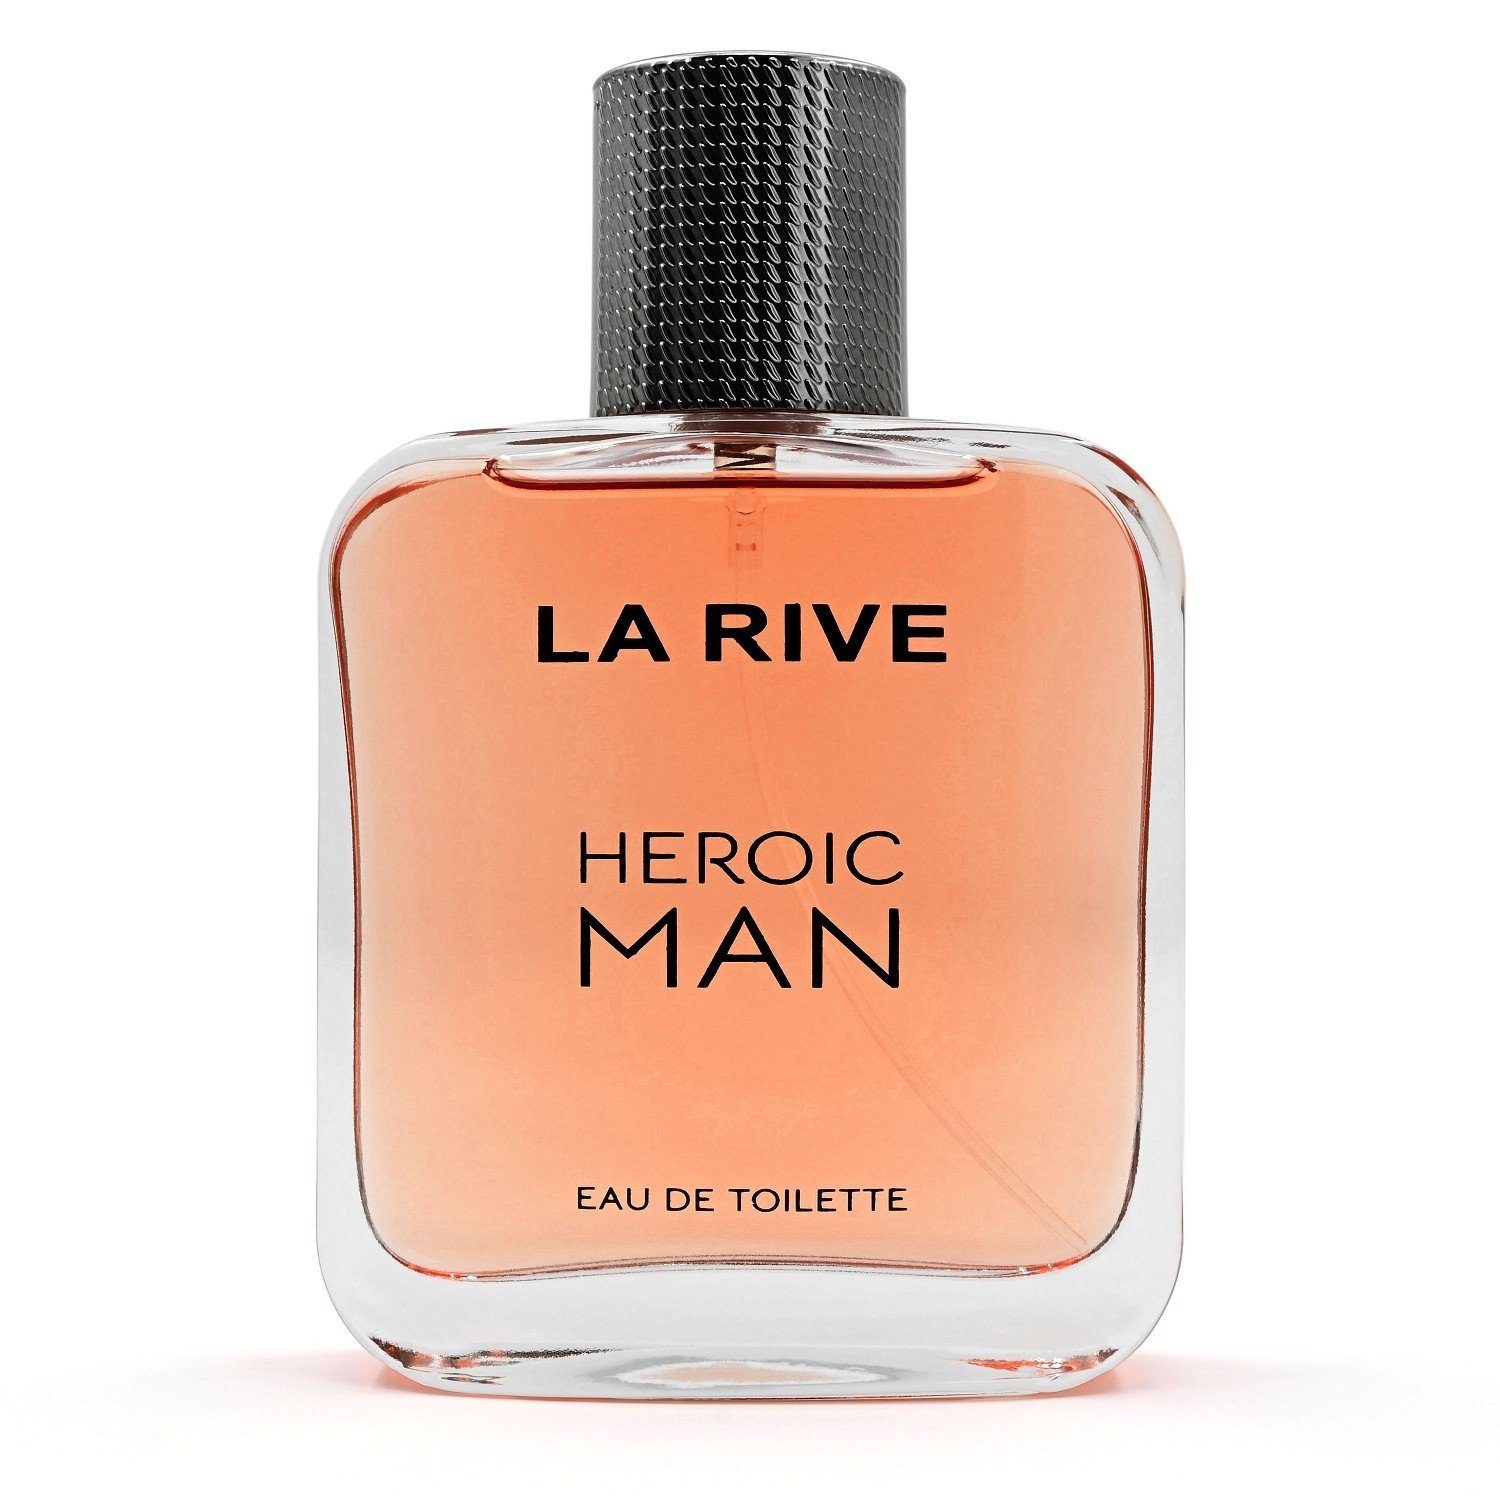 La Eau Man Heroic Toilette RIVE - Eau de ml 100 ml, de Toilette 100 - Rive LA